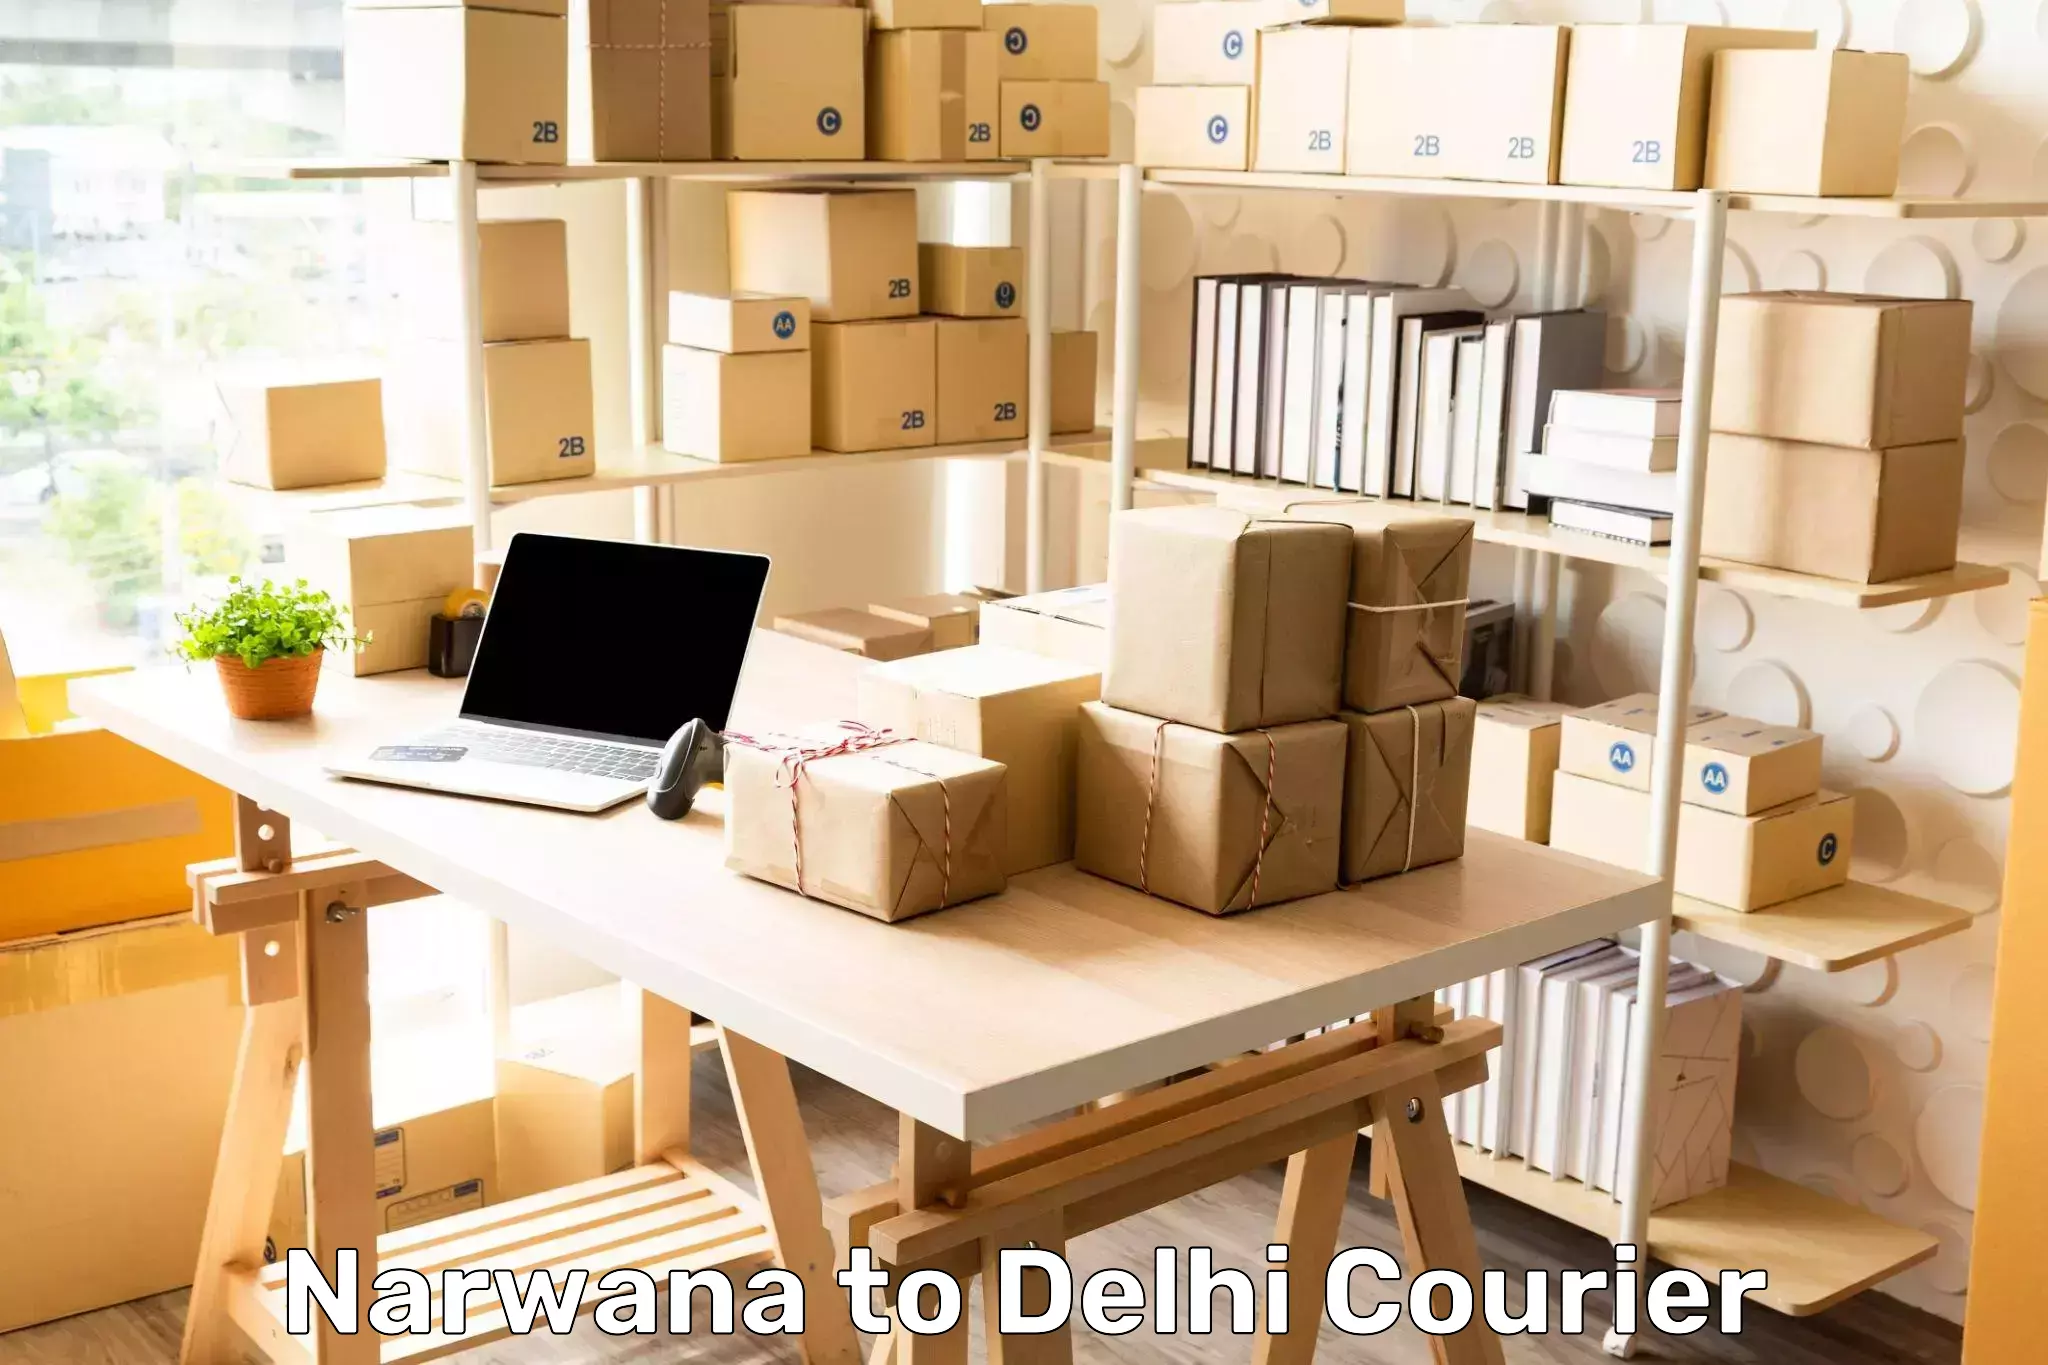 Express delivery capabilities Narwana to East Delhi